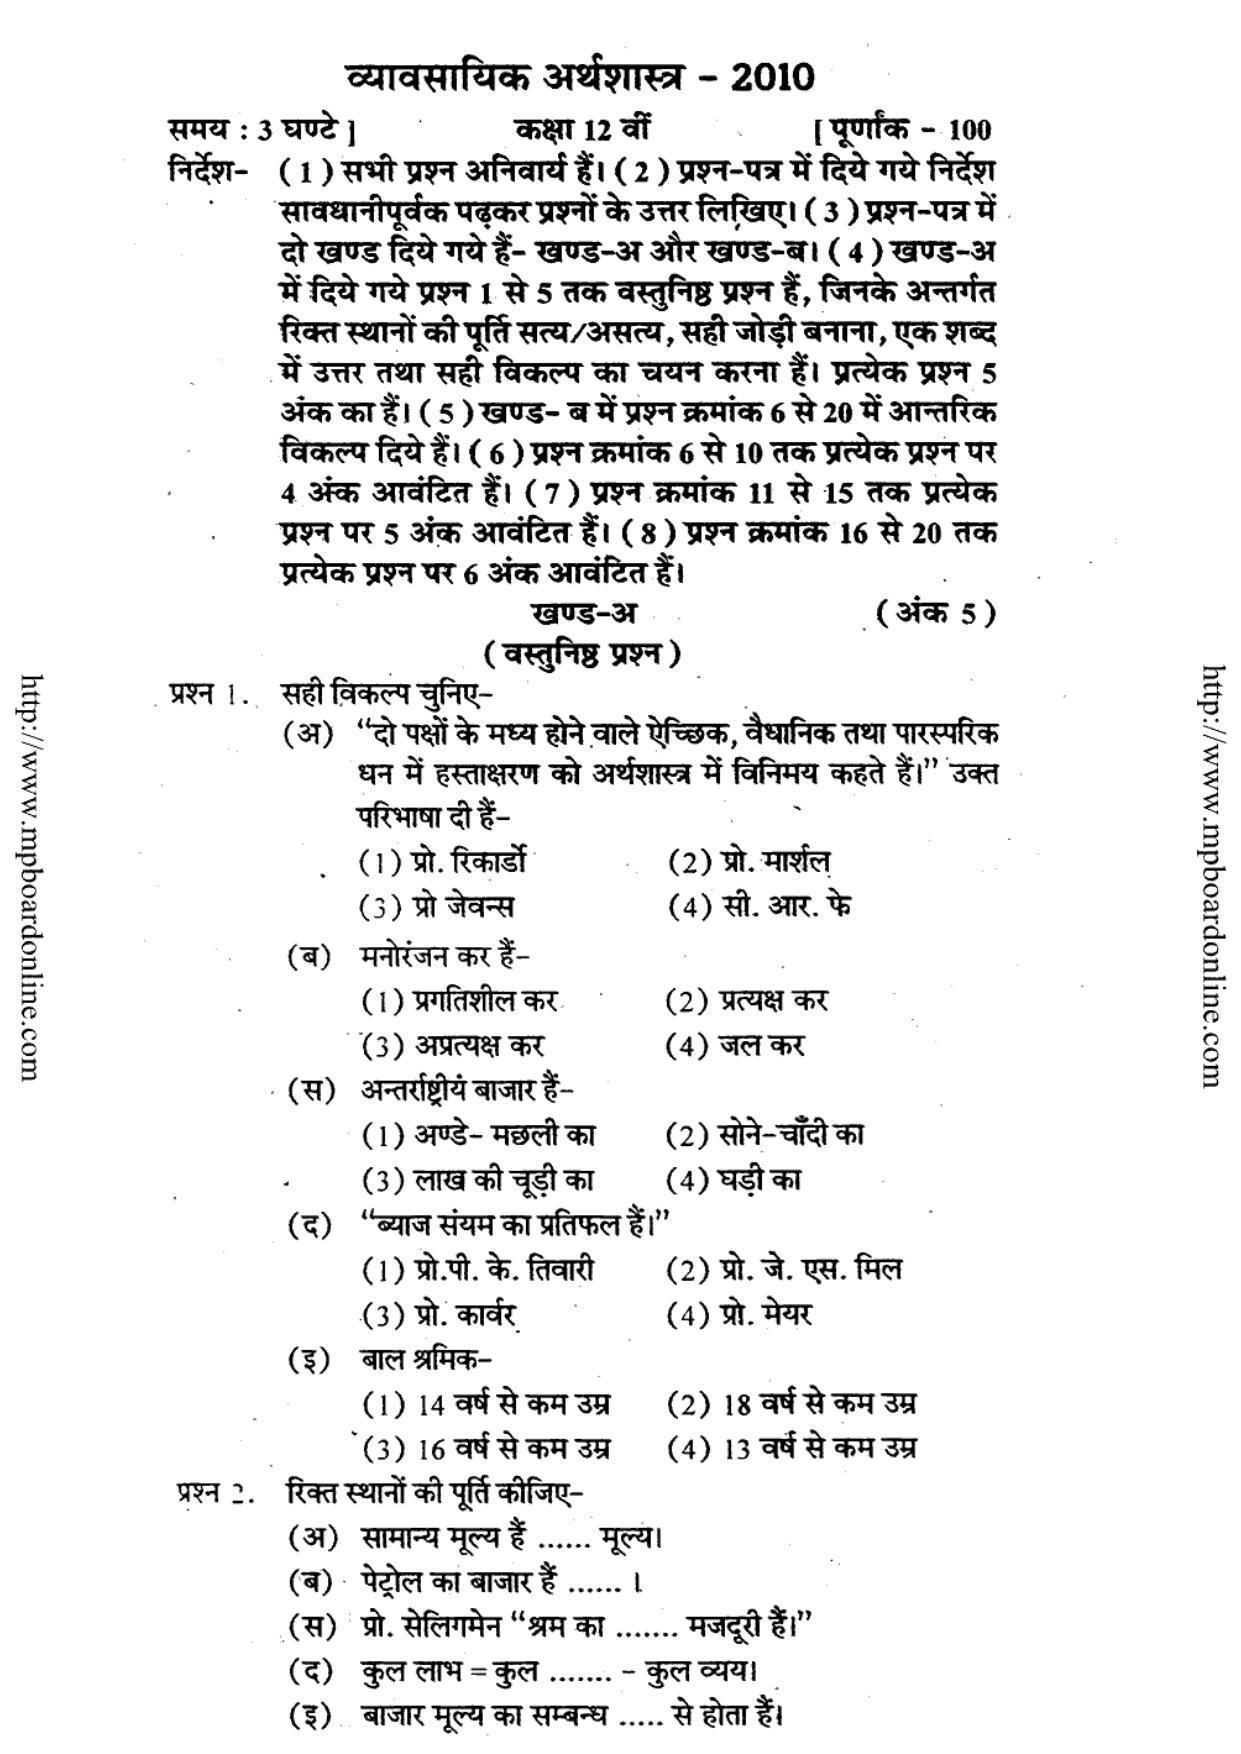 MP Board Class 12 Vyavsayik Arthshastra (Hindi Medium) 2010 Question Paper - Page 1